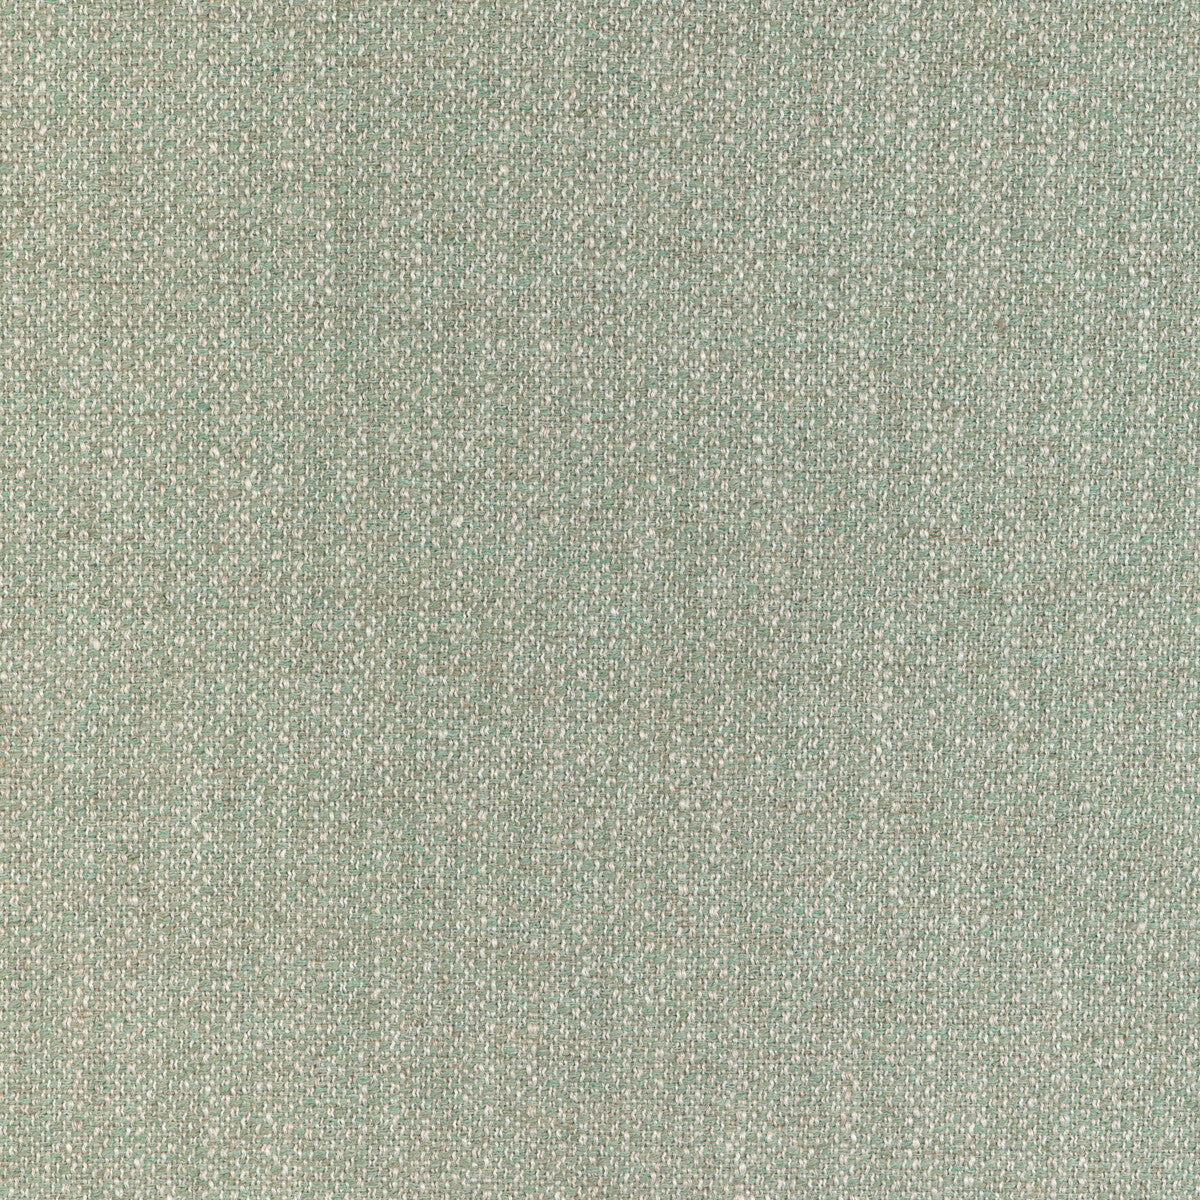 Torus fabric in mist color - pattern GWF-3793.1613.0 - by Lee Jofa Modern in the Kelly Wearstler VIII collection